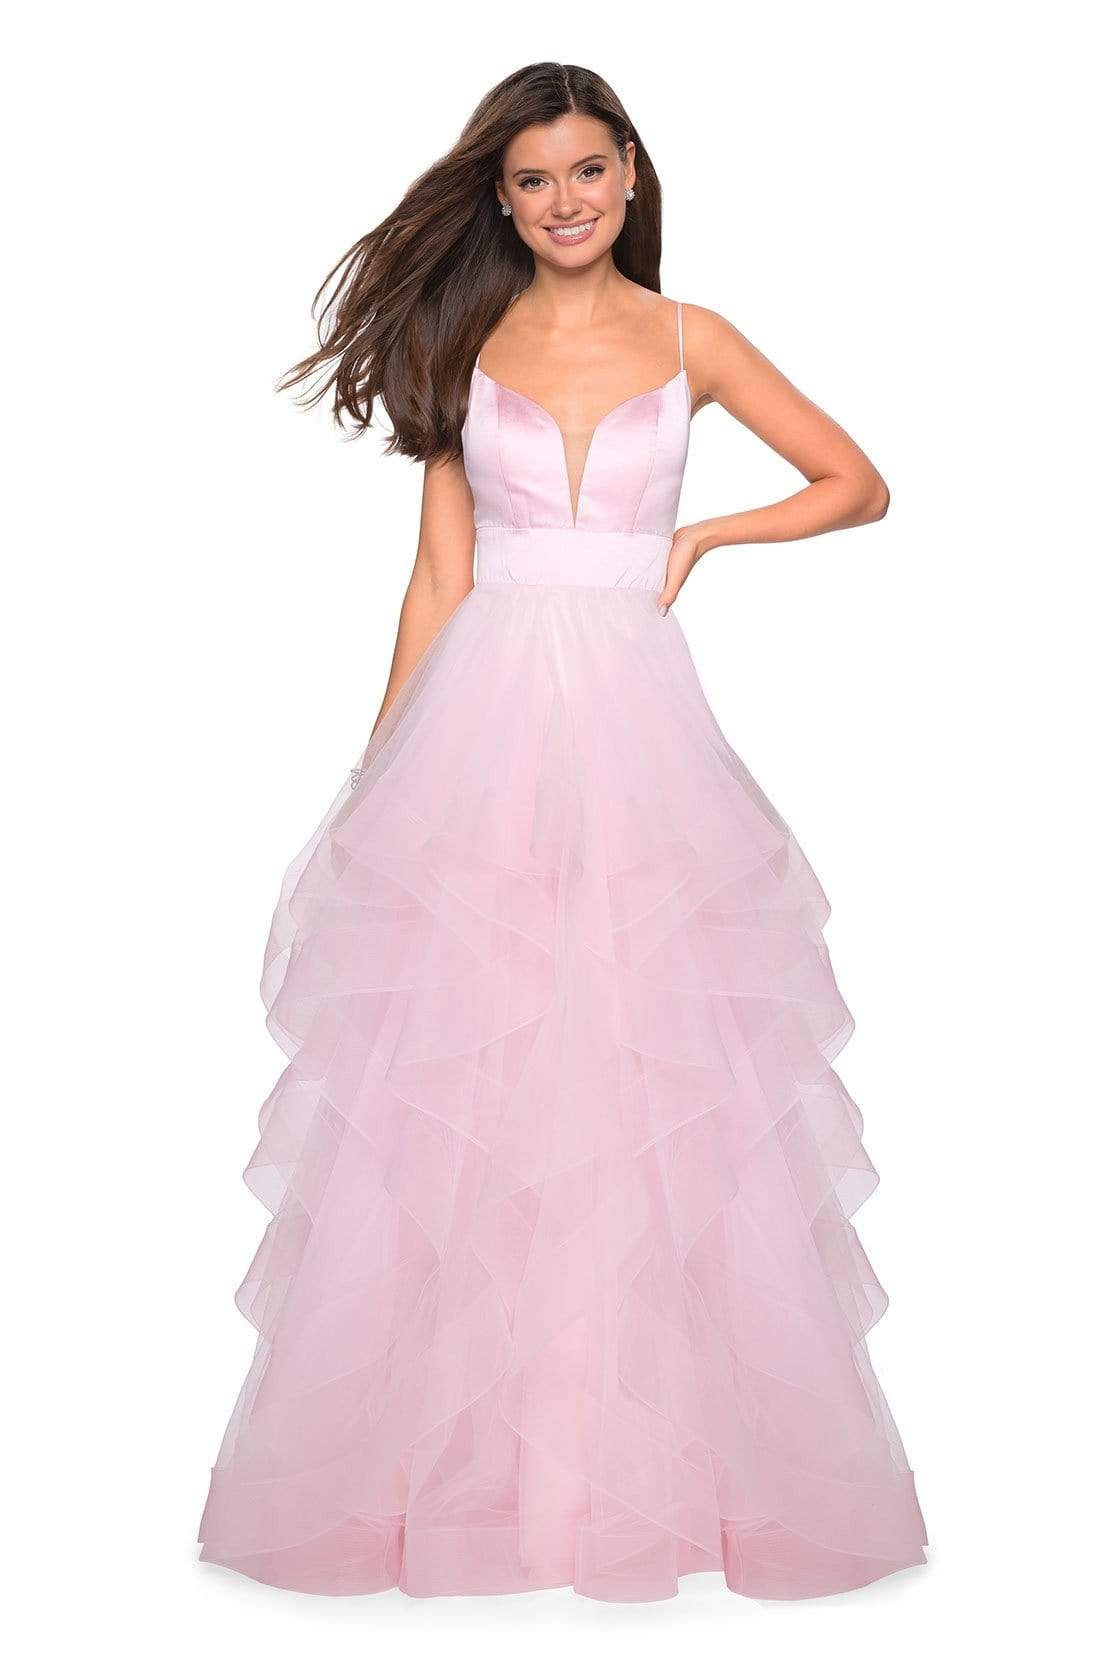 La Femme - 27024 Sleeveless Plunging Illusion Neckline Ruffles Ballgown Special Occasion Dress 00 / Light Pink